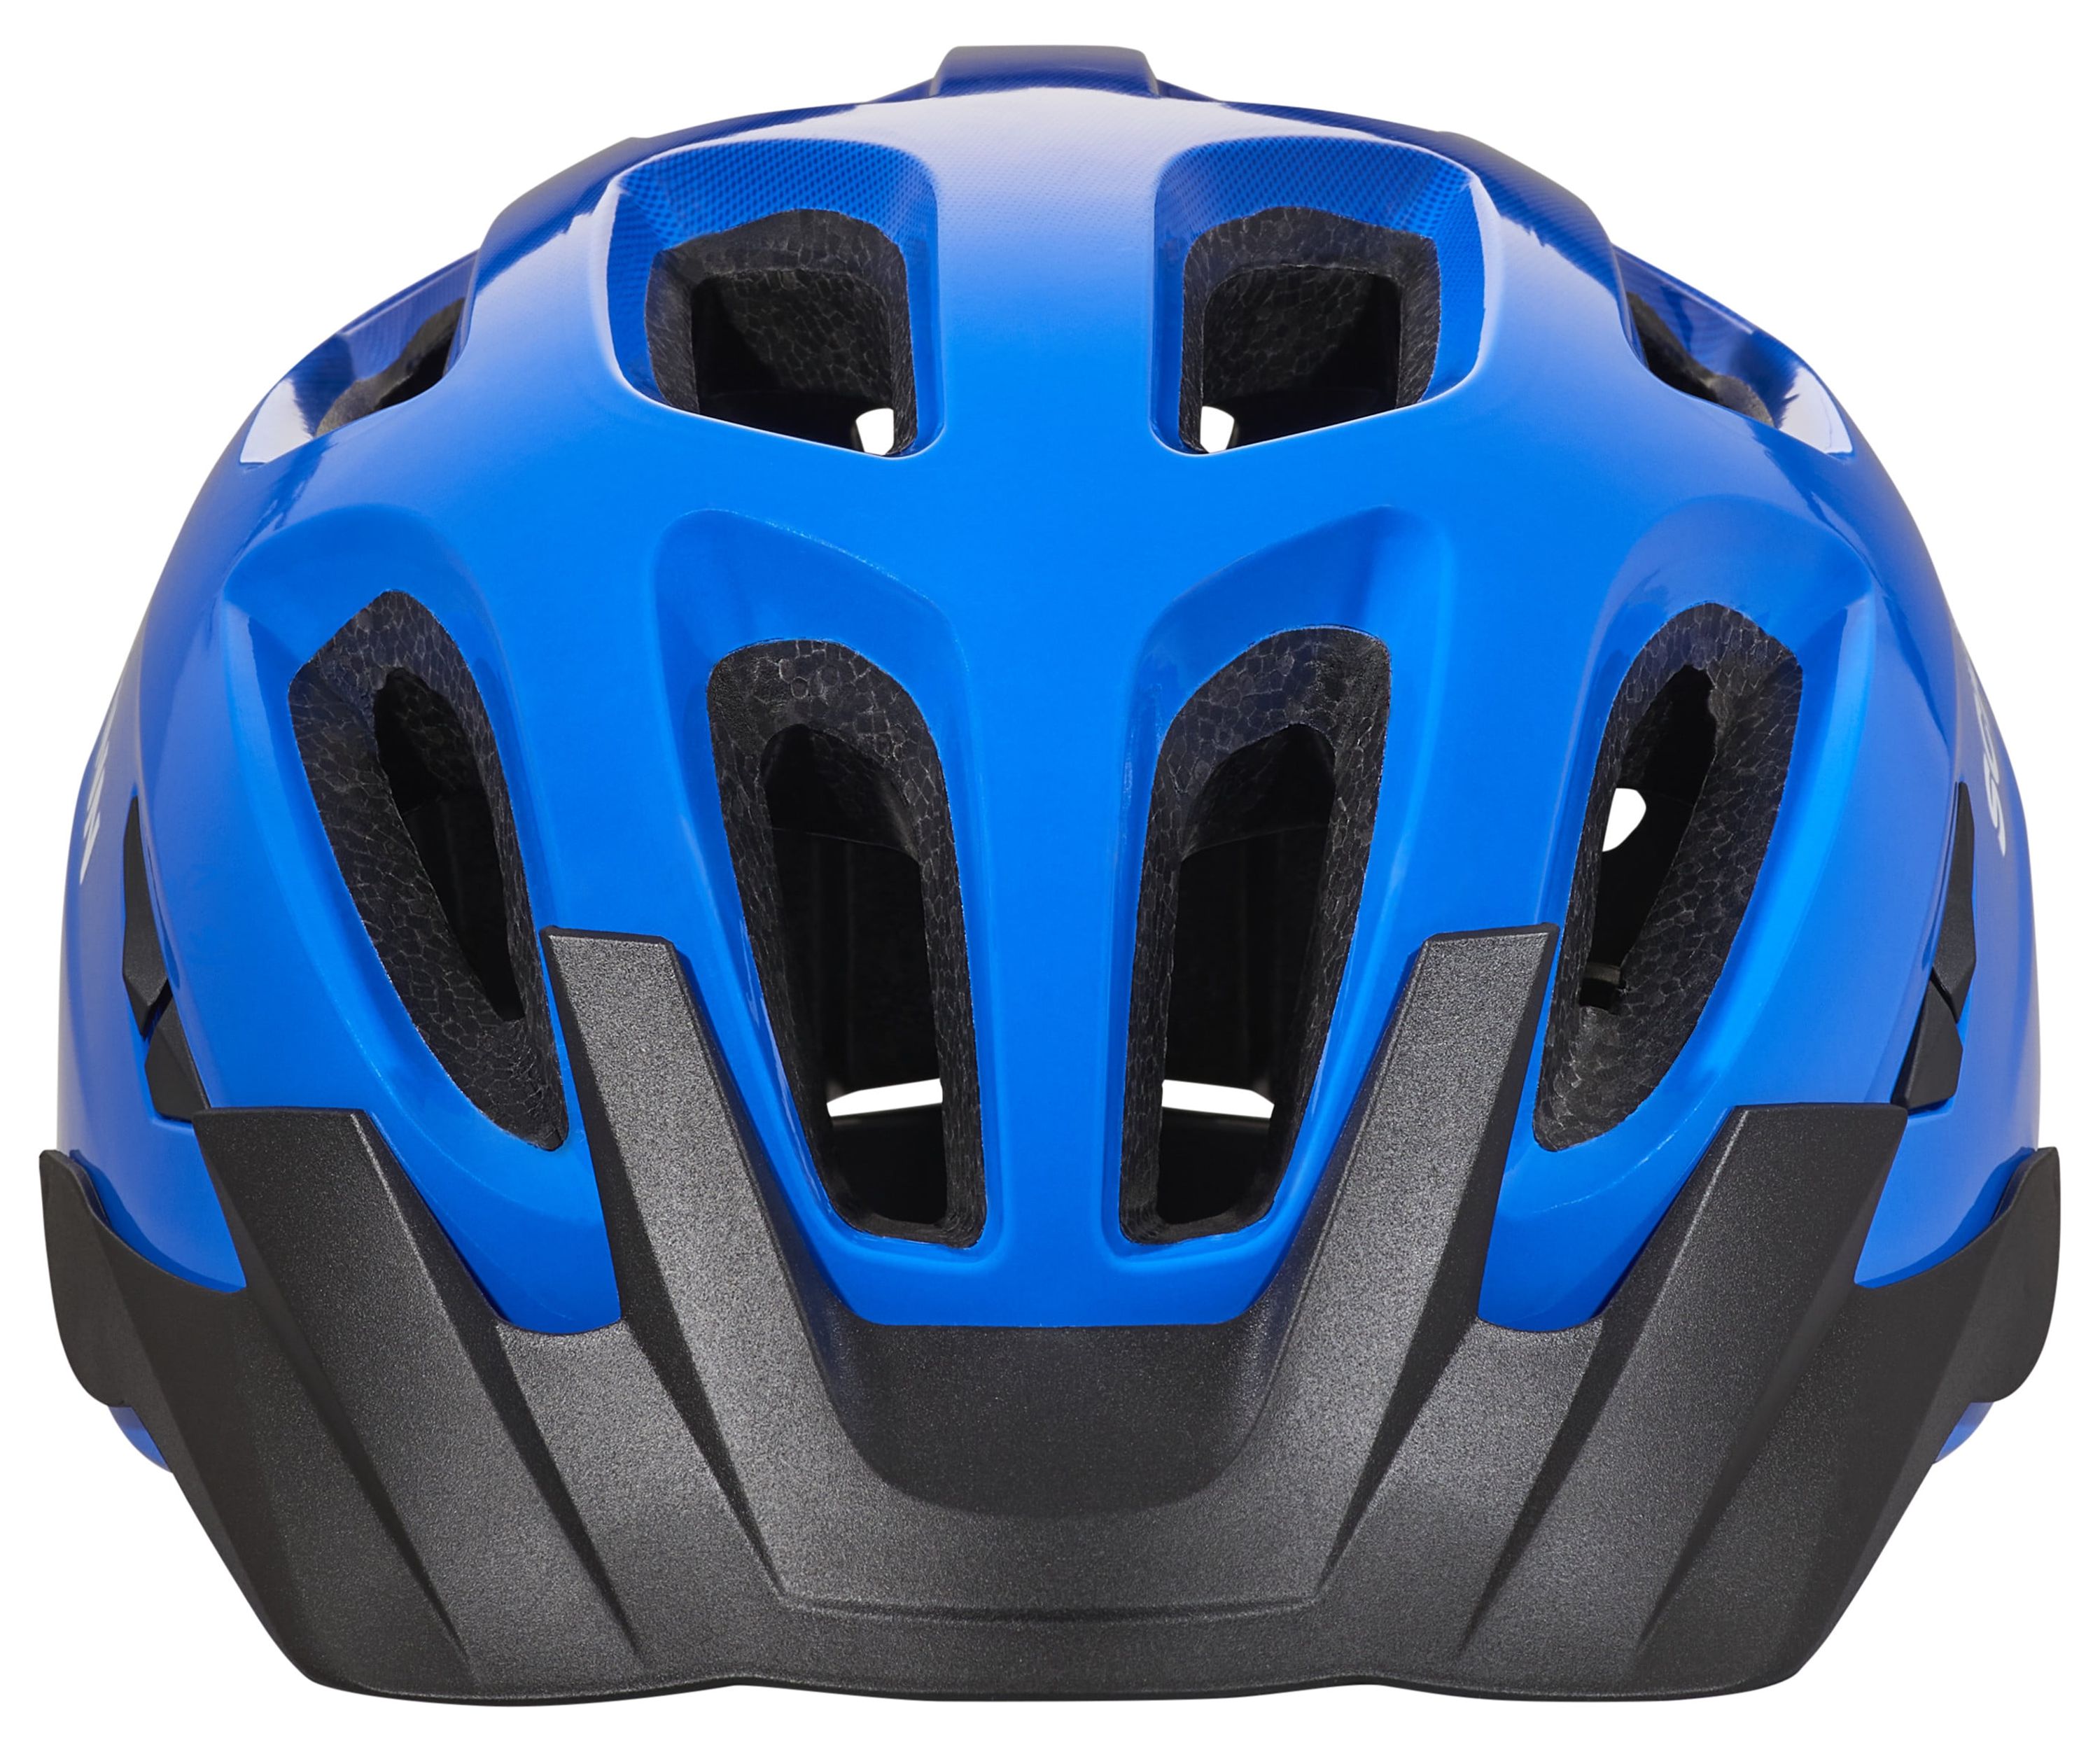 Schwinn Outlook Adult Helmet, Ages 14+, Blue - image 3 of 6